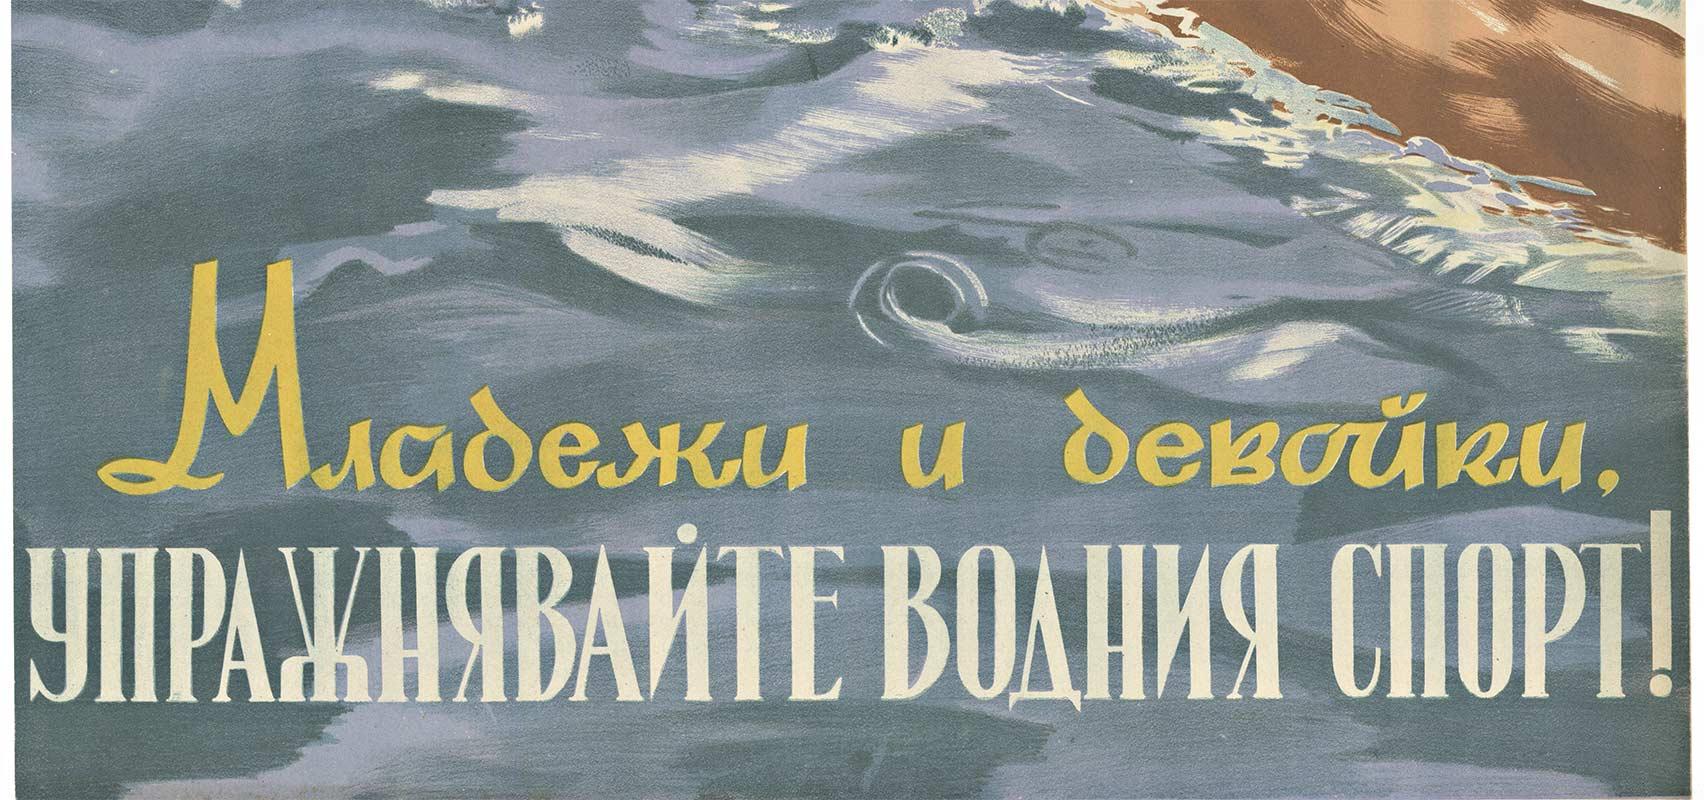 Practice Water Sports, Eastern Block original vintage poster - Print by Unknown